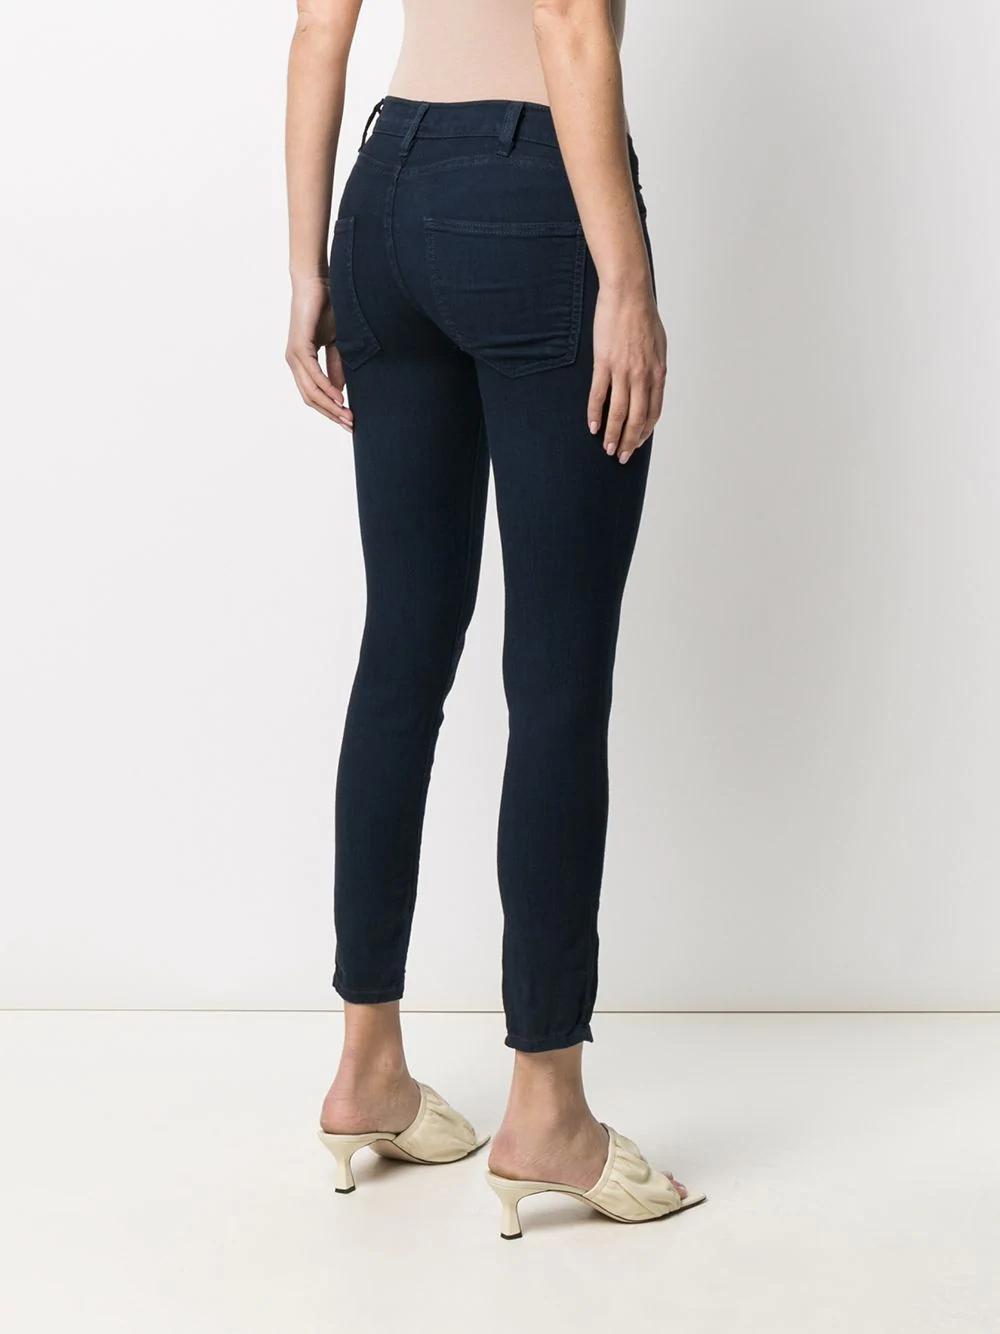 Current/Elliott Denim Low Rise Skinny Cut Jeans in 27 (Blue) - Save 70% |  Lyst